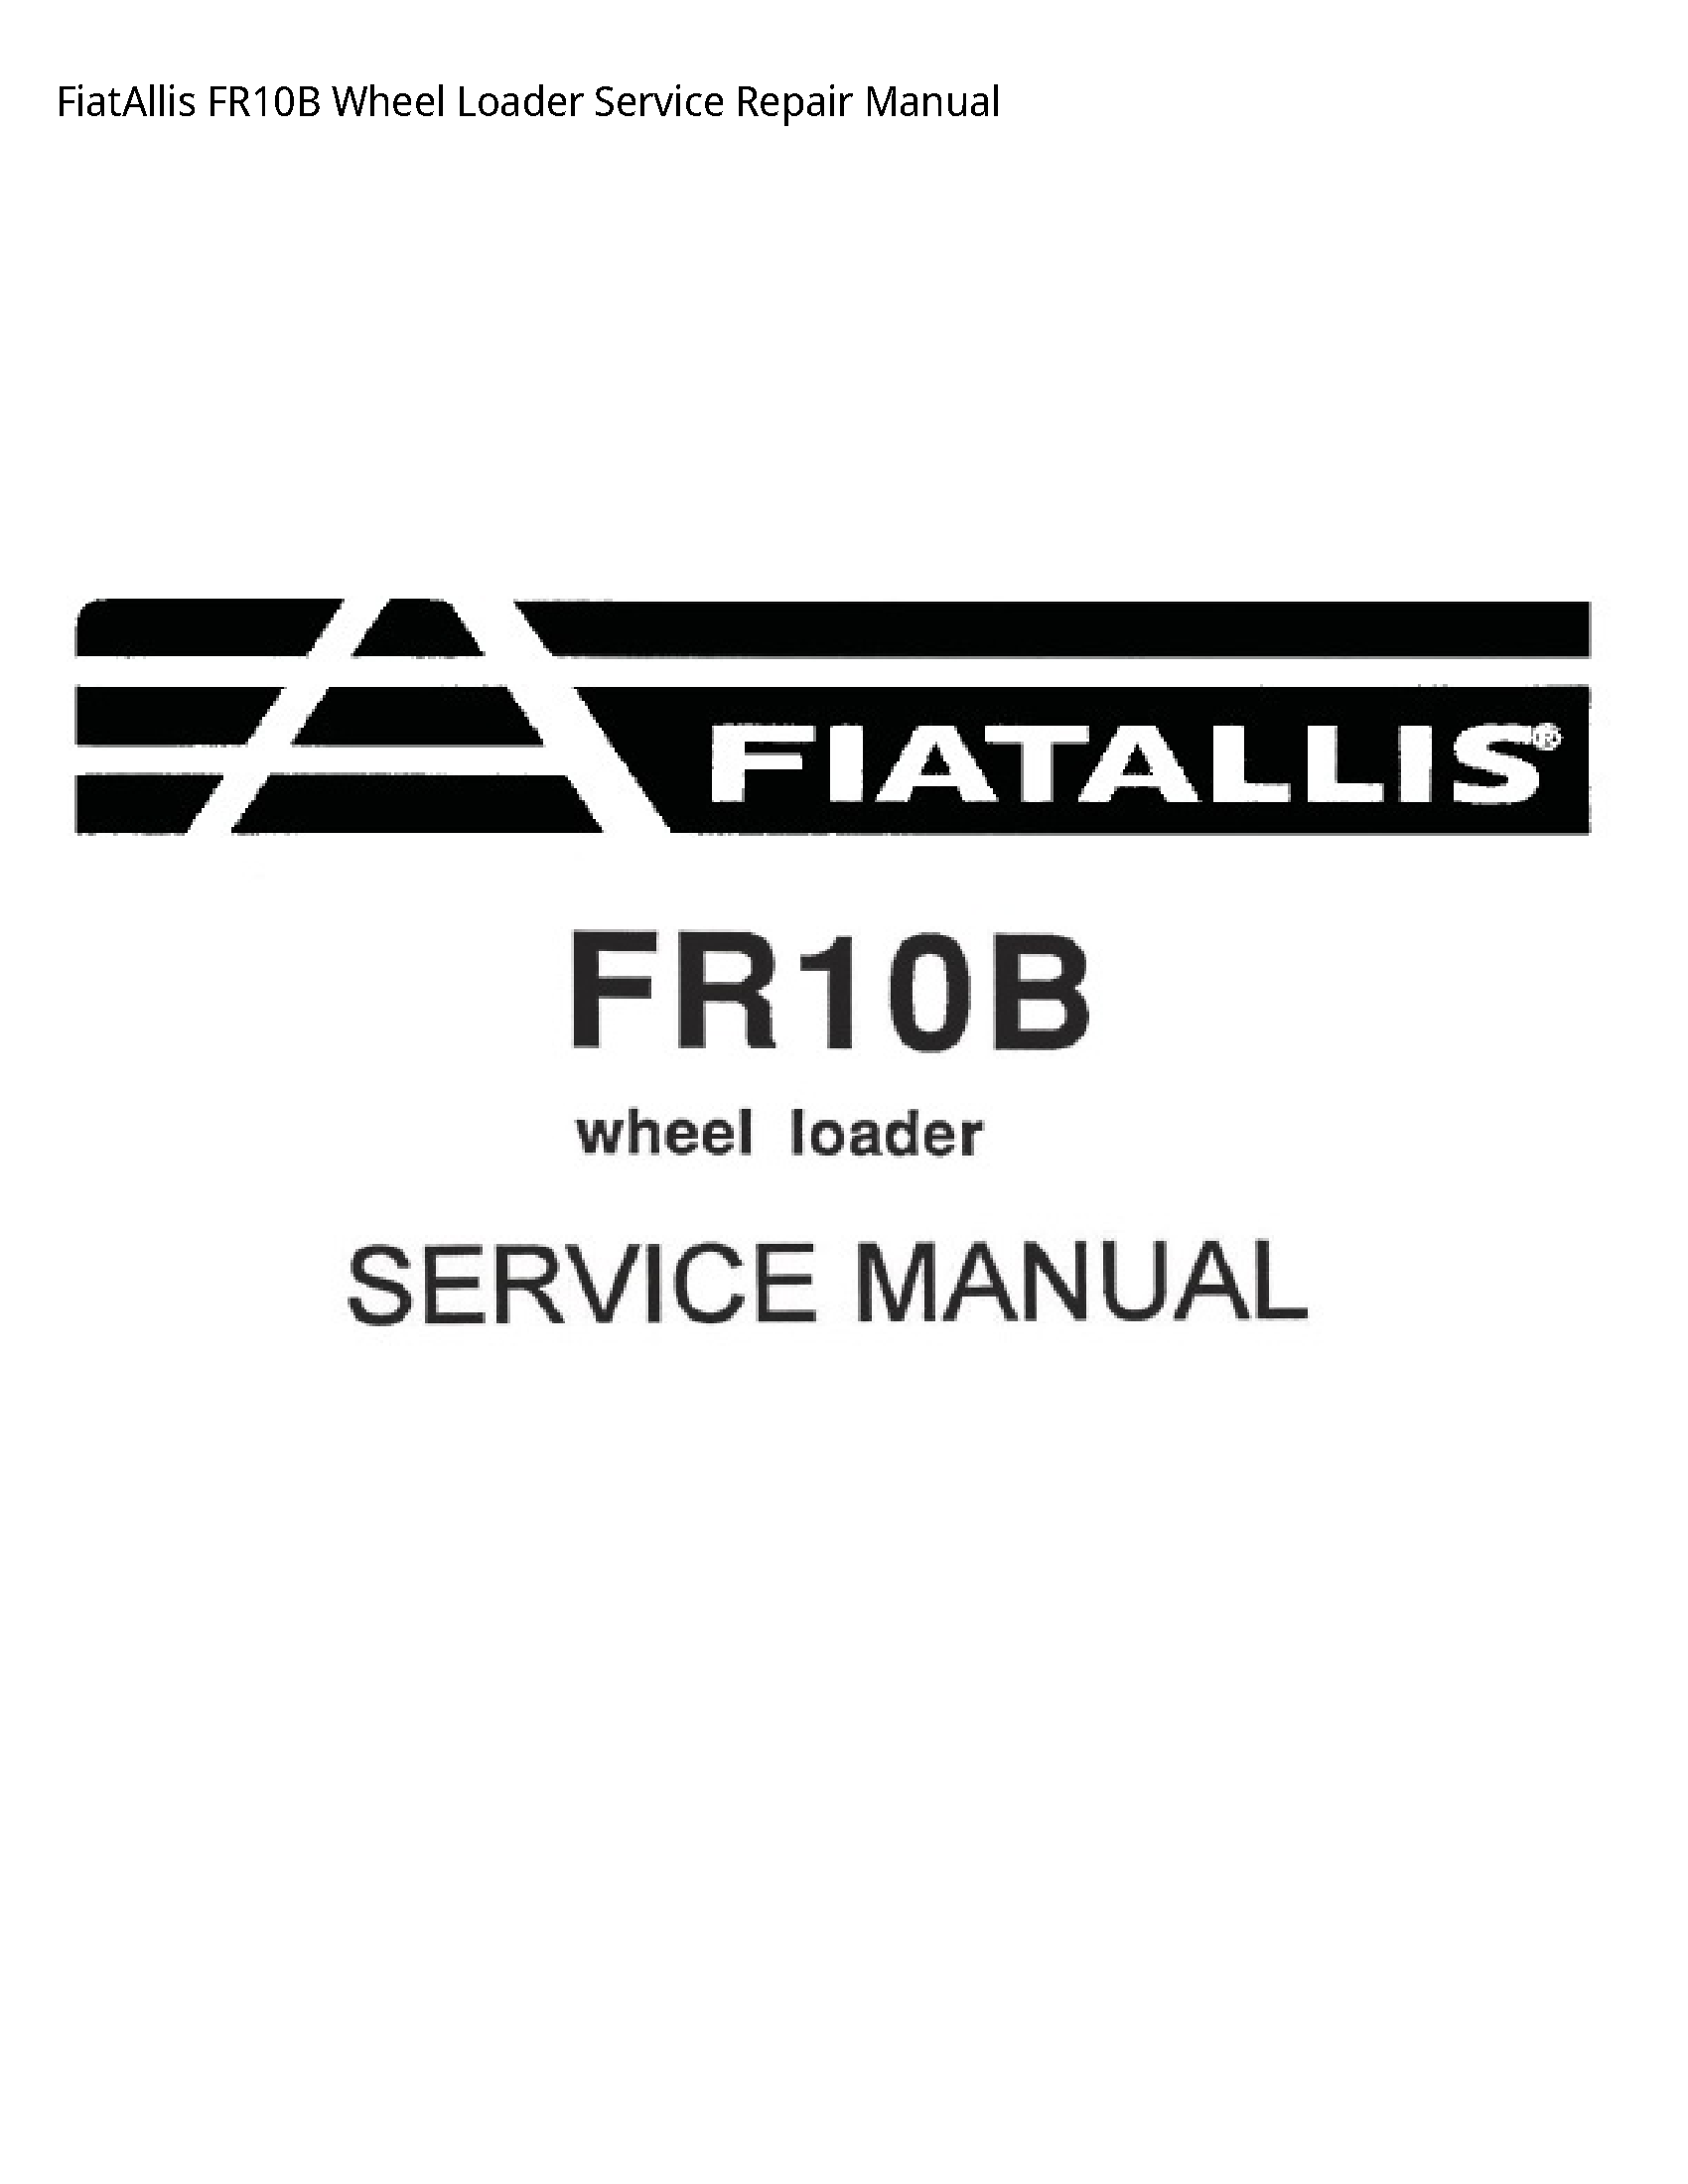 Fiatallis FR10B Wheel Loader manual